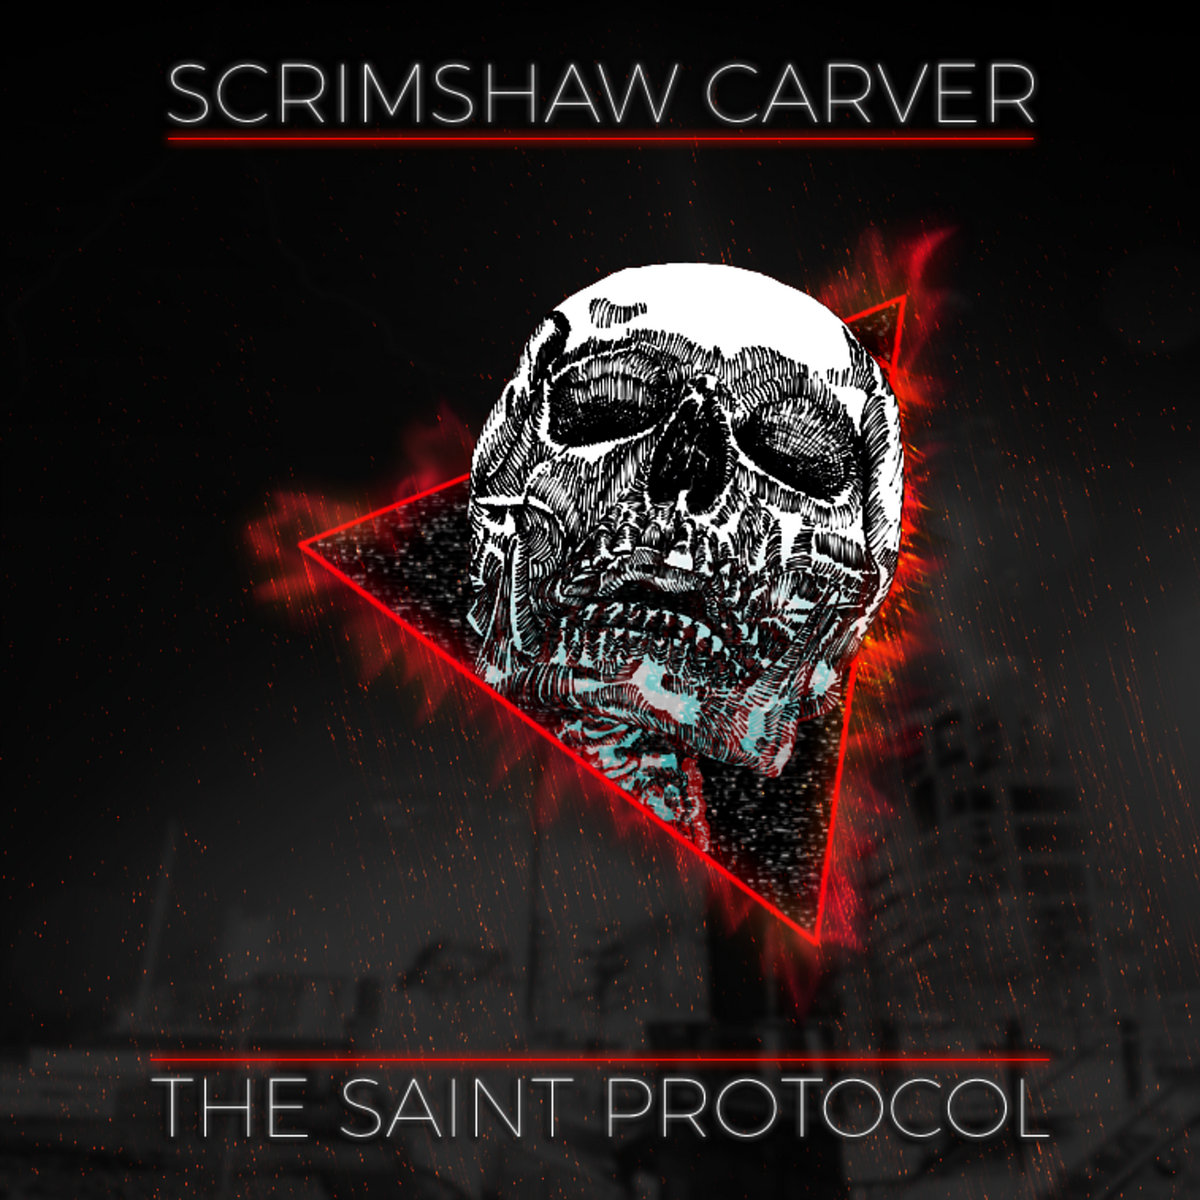 Scrimshaw Carver's album, The Saint Protocol